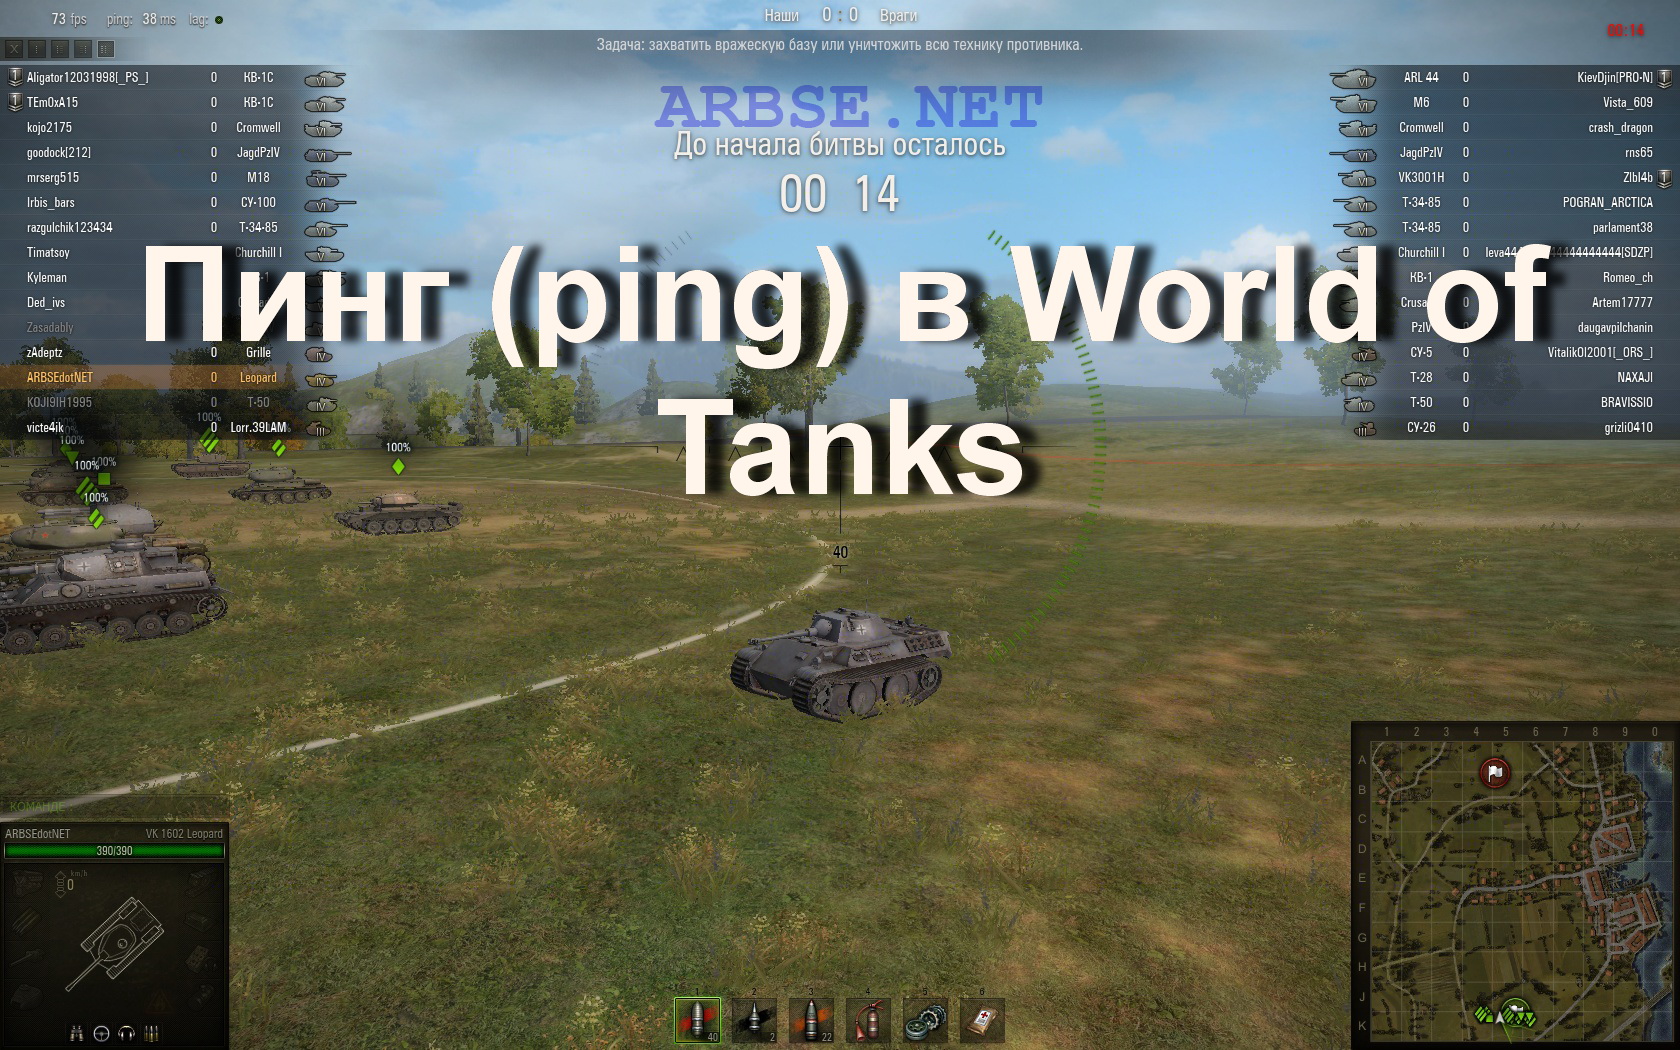 Ping try. Высокий пинг в World of Tanks. Высокий пинг в играх. Что такое пинг в играх. Пинг в танках WOT.